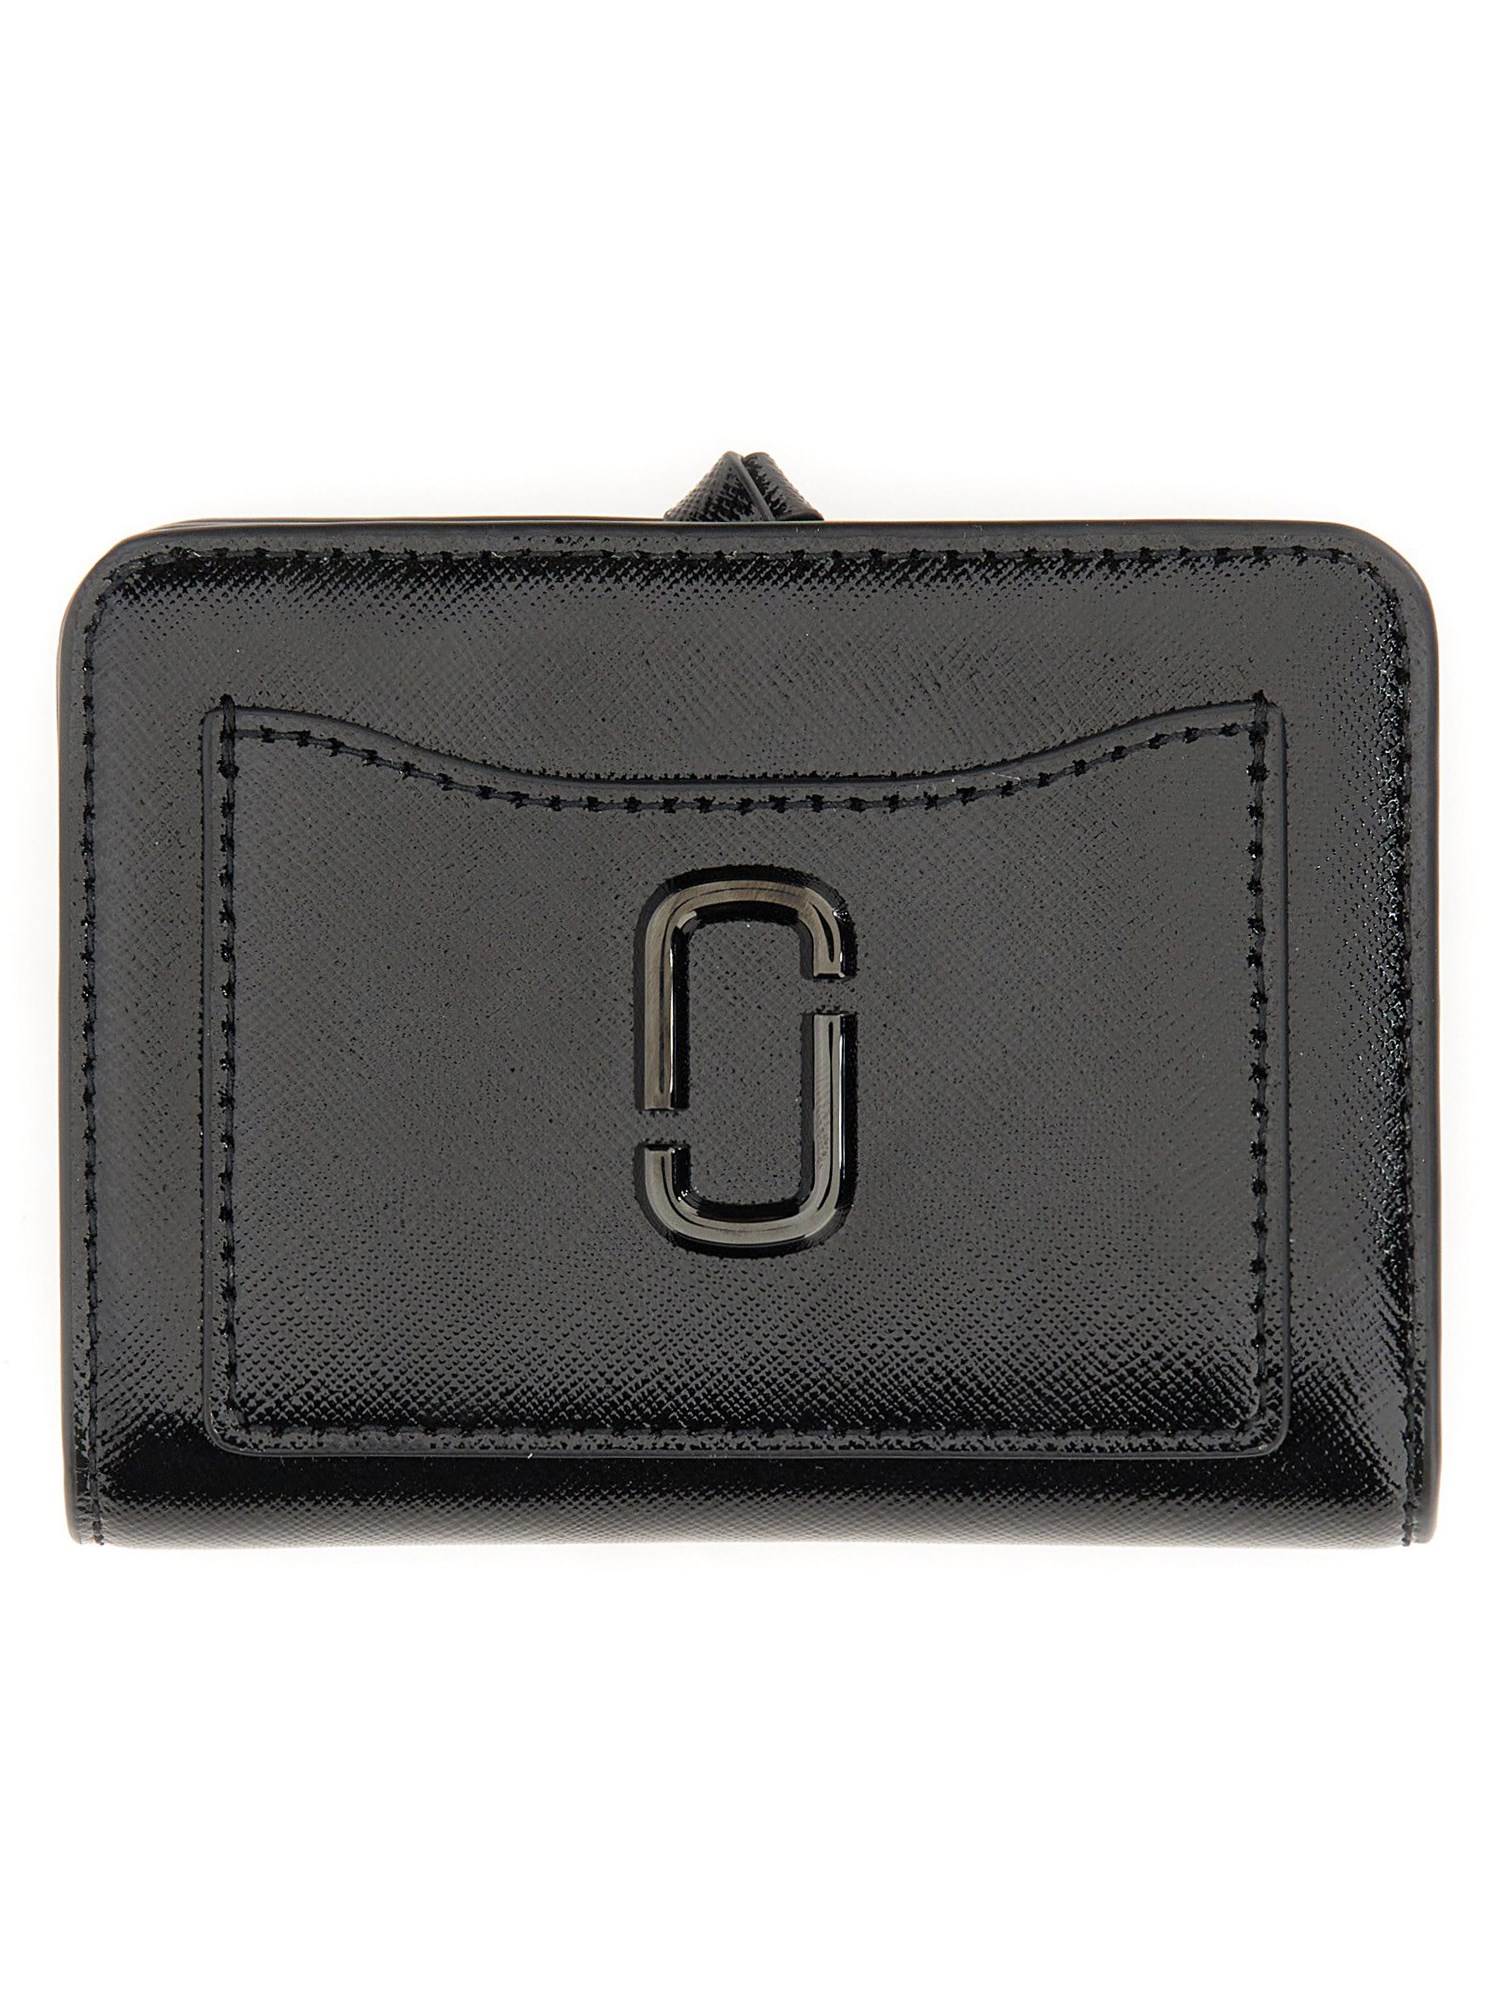 marc jacobs compact wallet the utility snapshot dtm mini